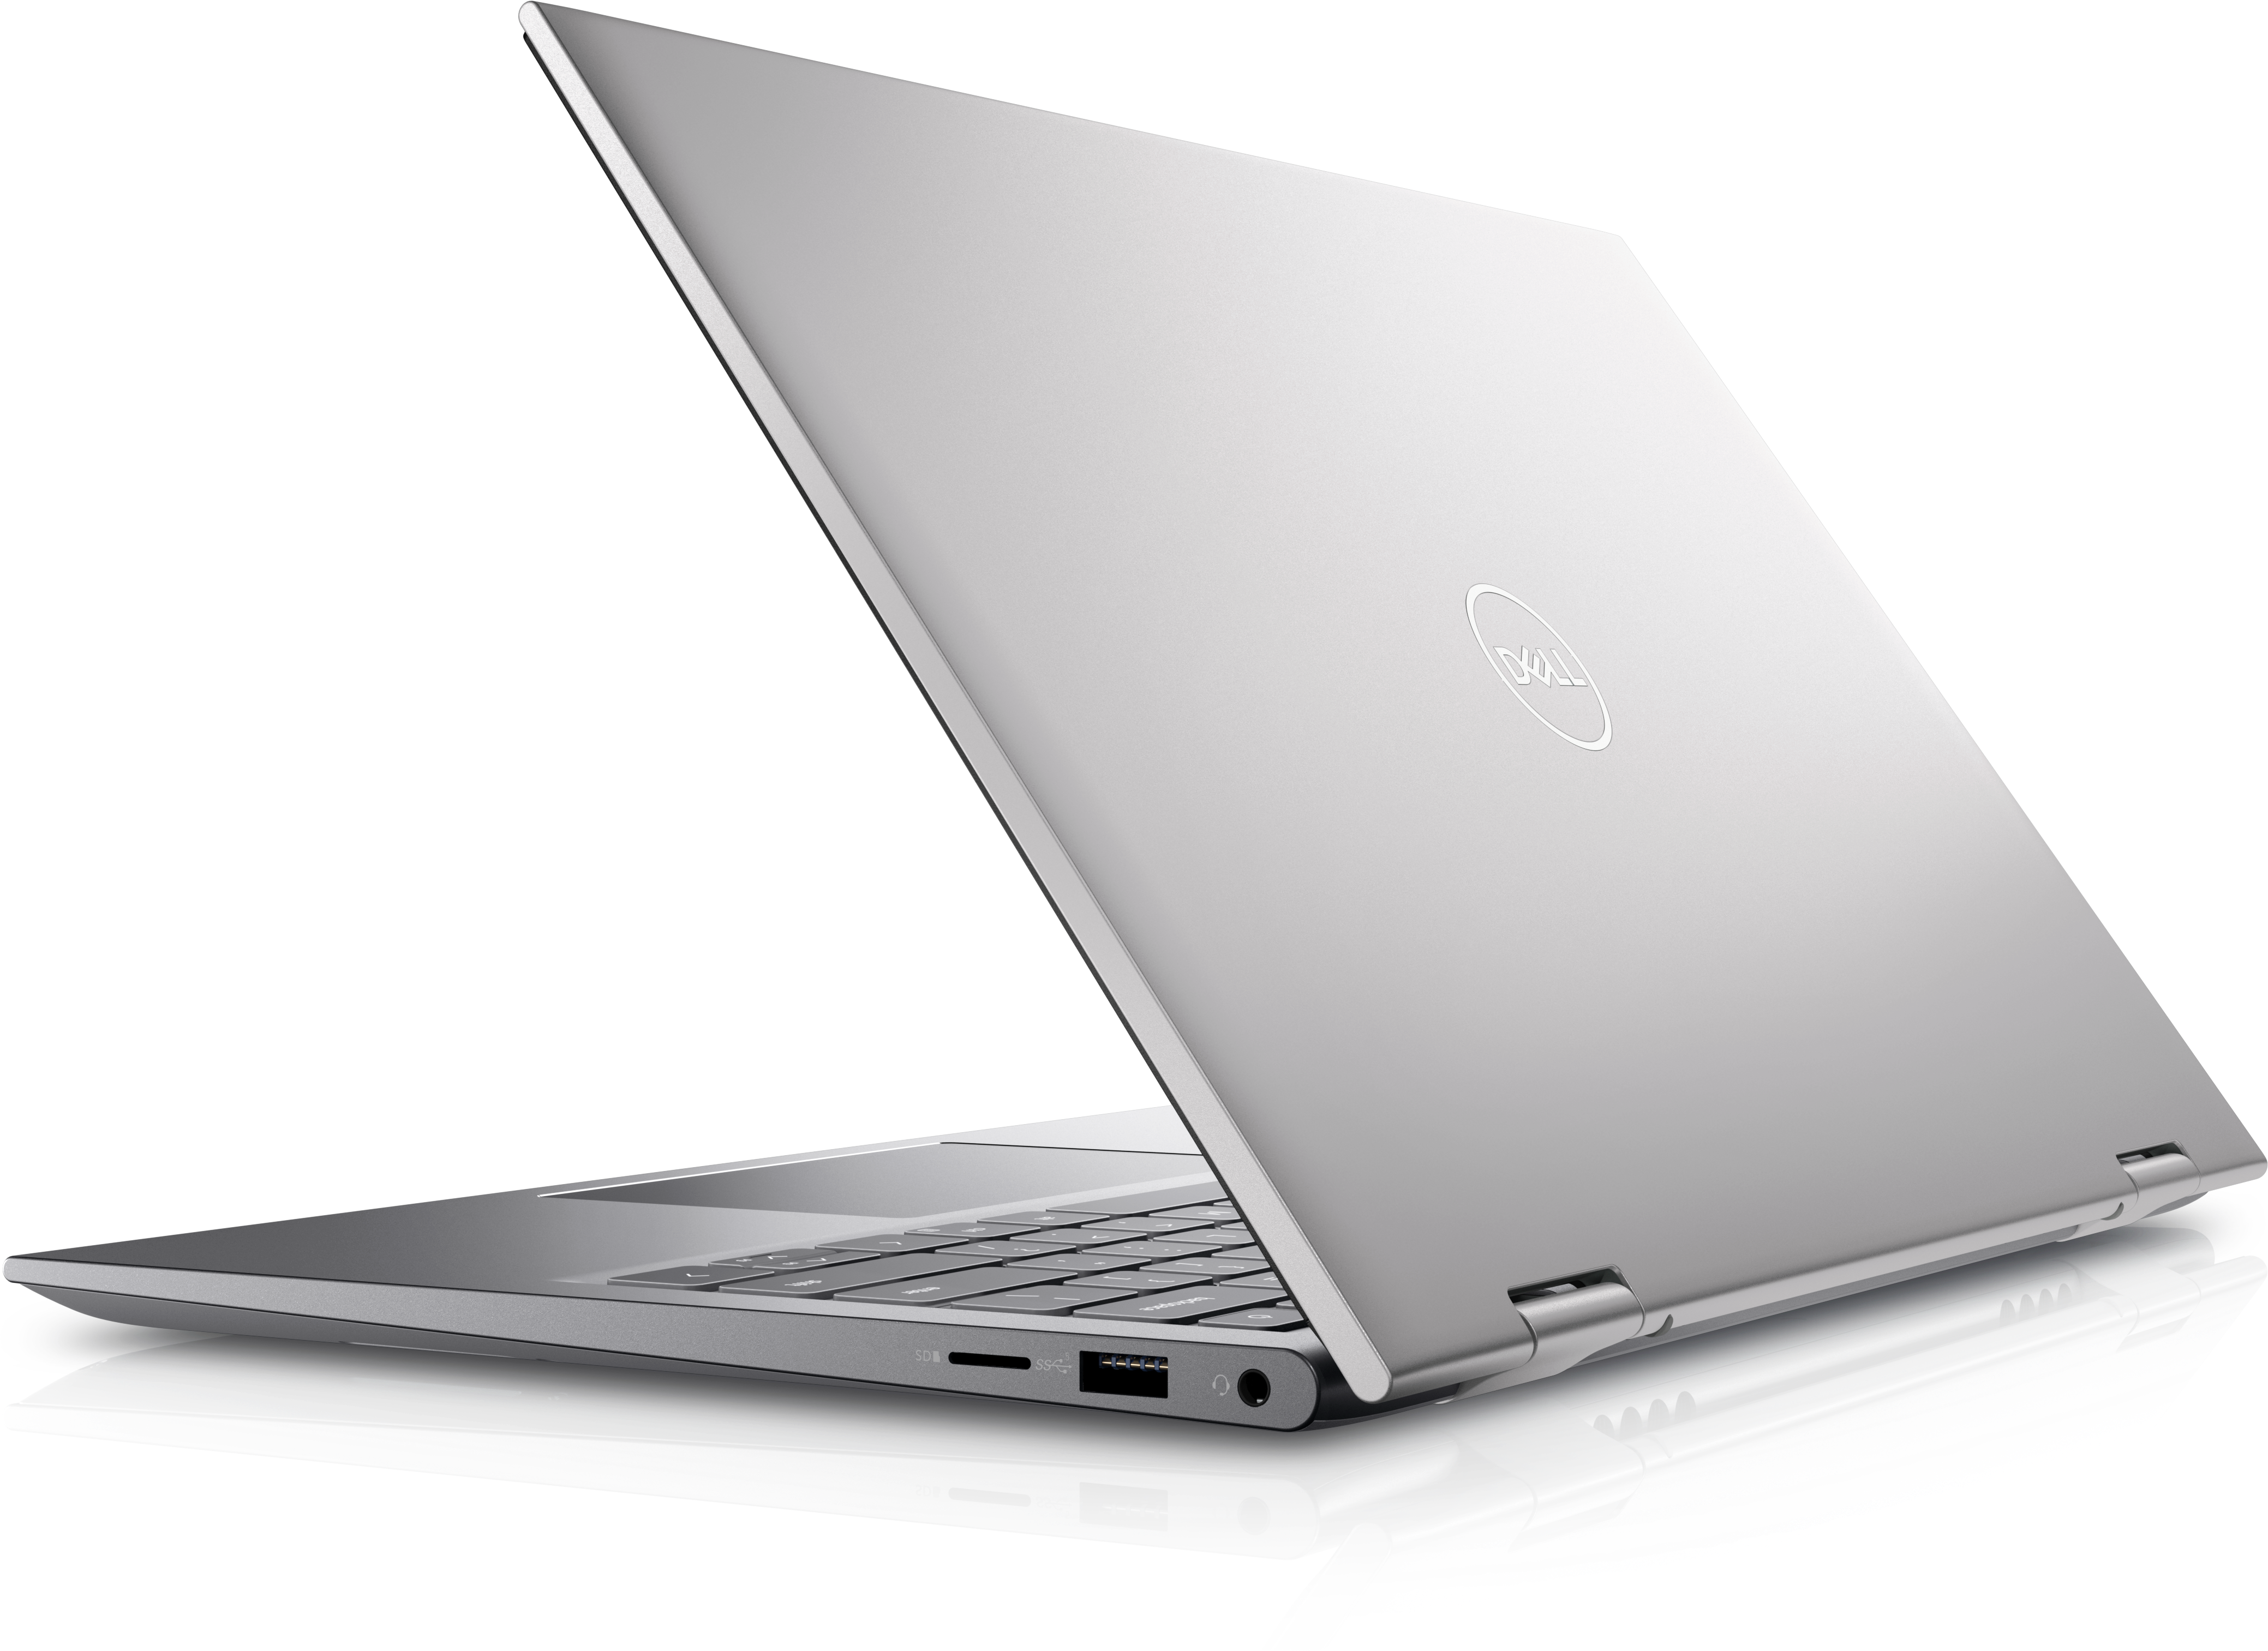 Dell Inspiron 14 2-in-1 5410 Laptop with Intel 11th Gen Processor | Dell USA